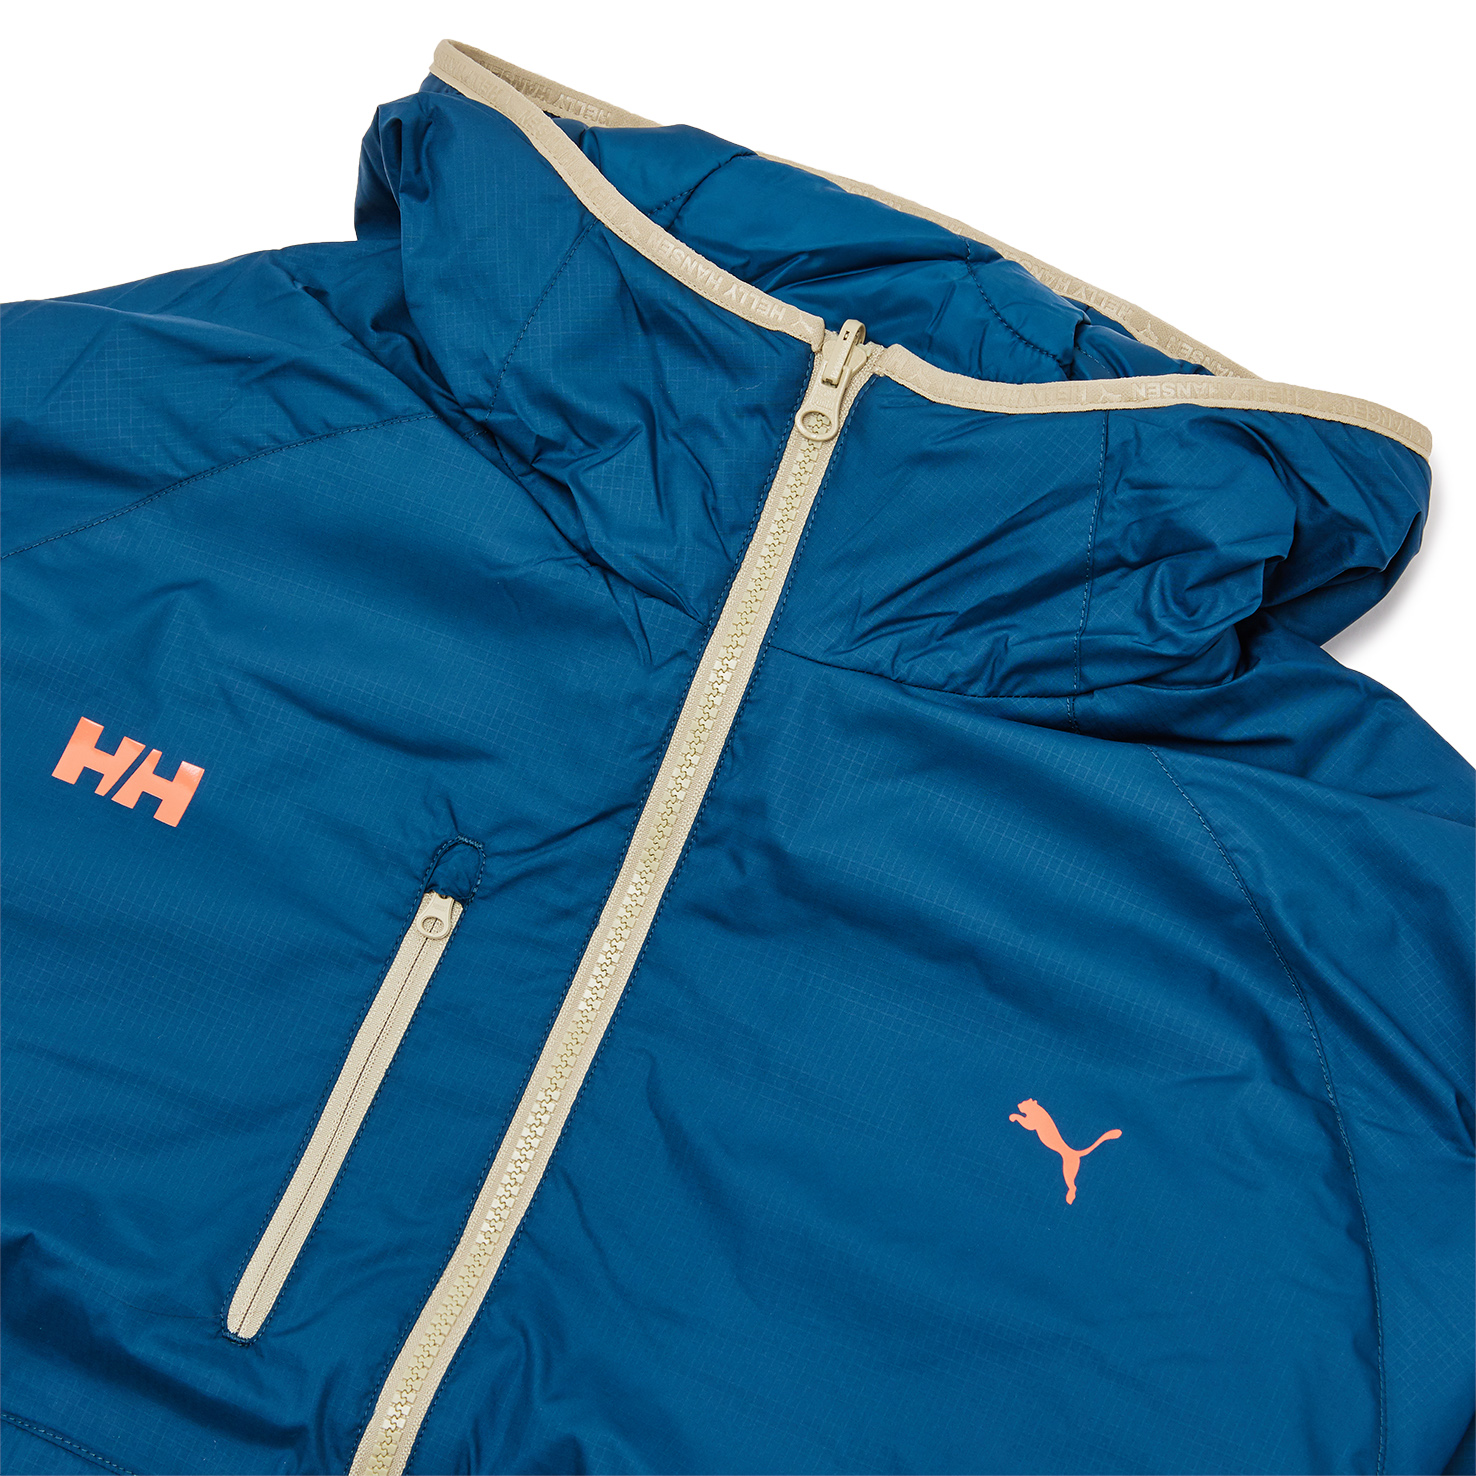 PUMA x HELLY HANSEN Rev. Padded Jacket I PUMA, размер L, цвет синий PM532841 - фото 3